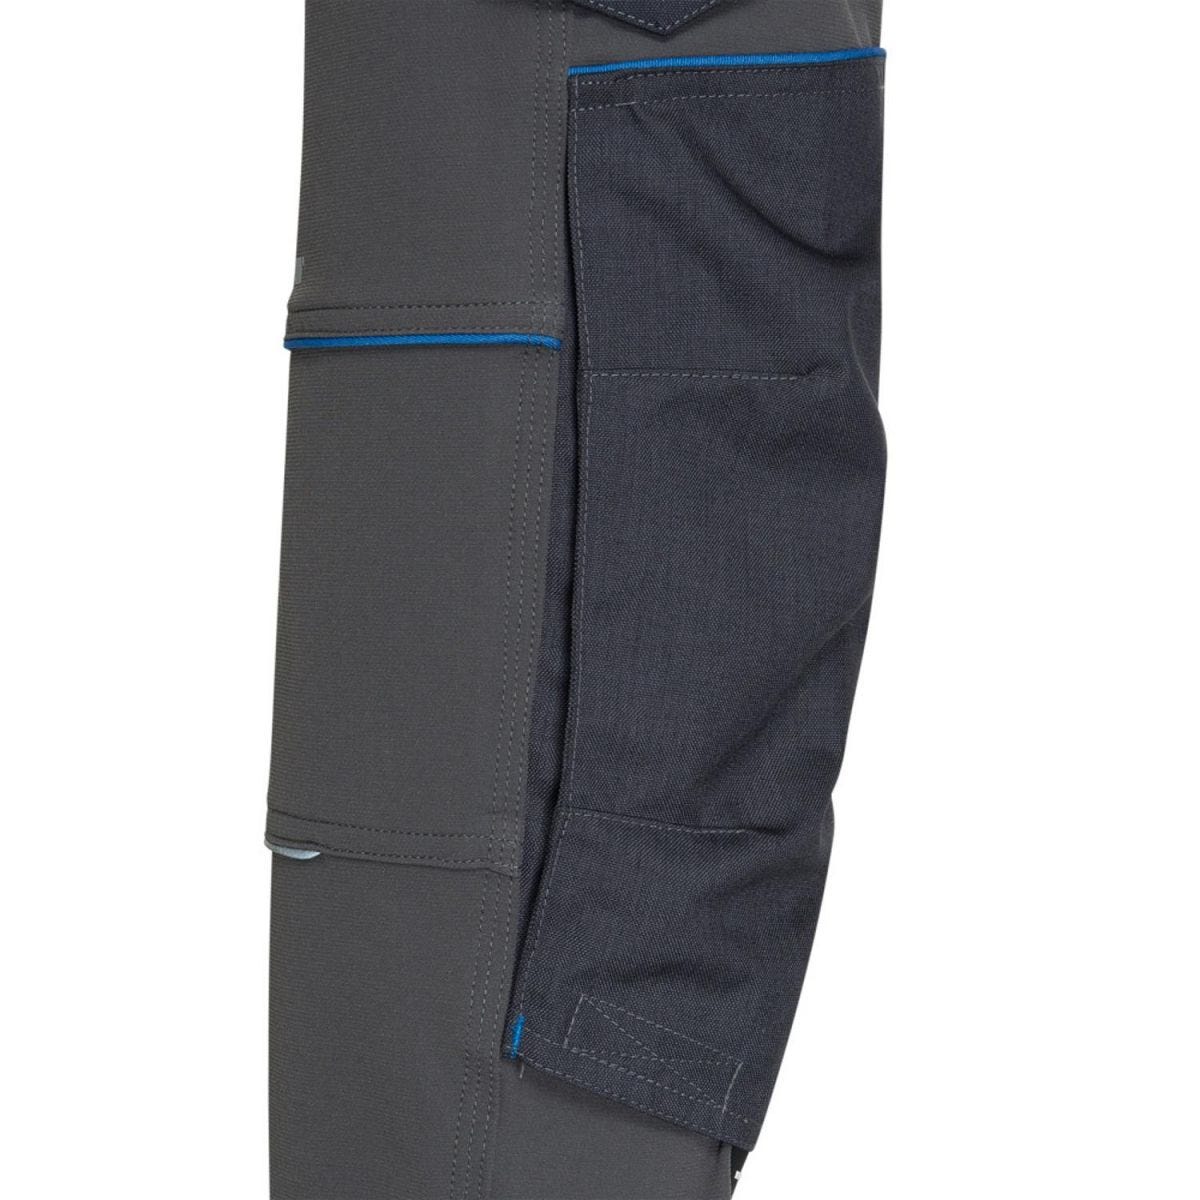 Pantalon de travail SACHA gris/bleu - North Ways - Taille 50 4